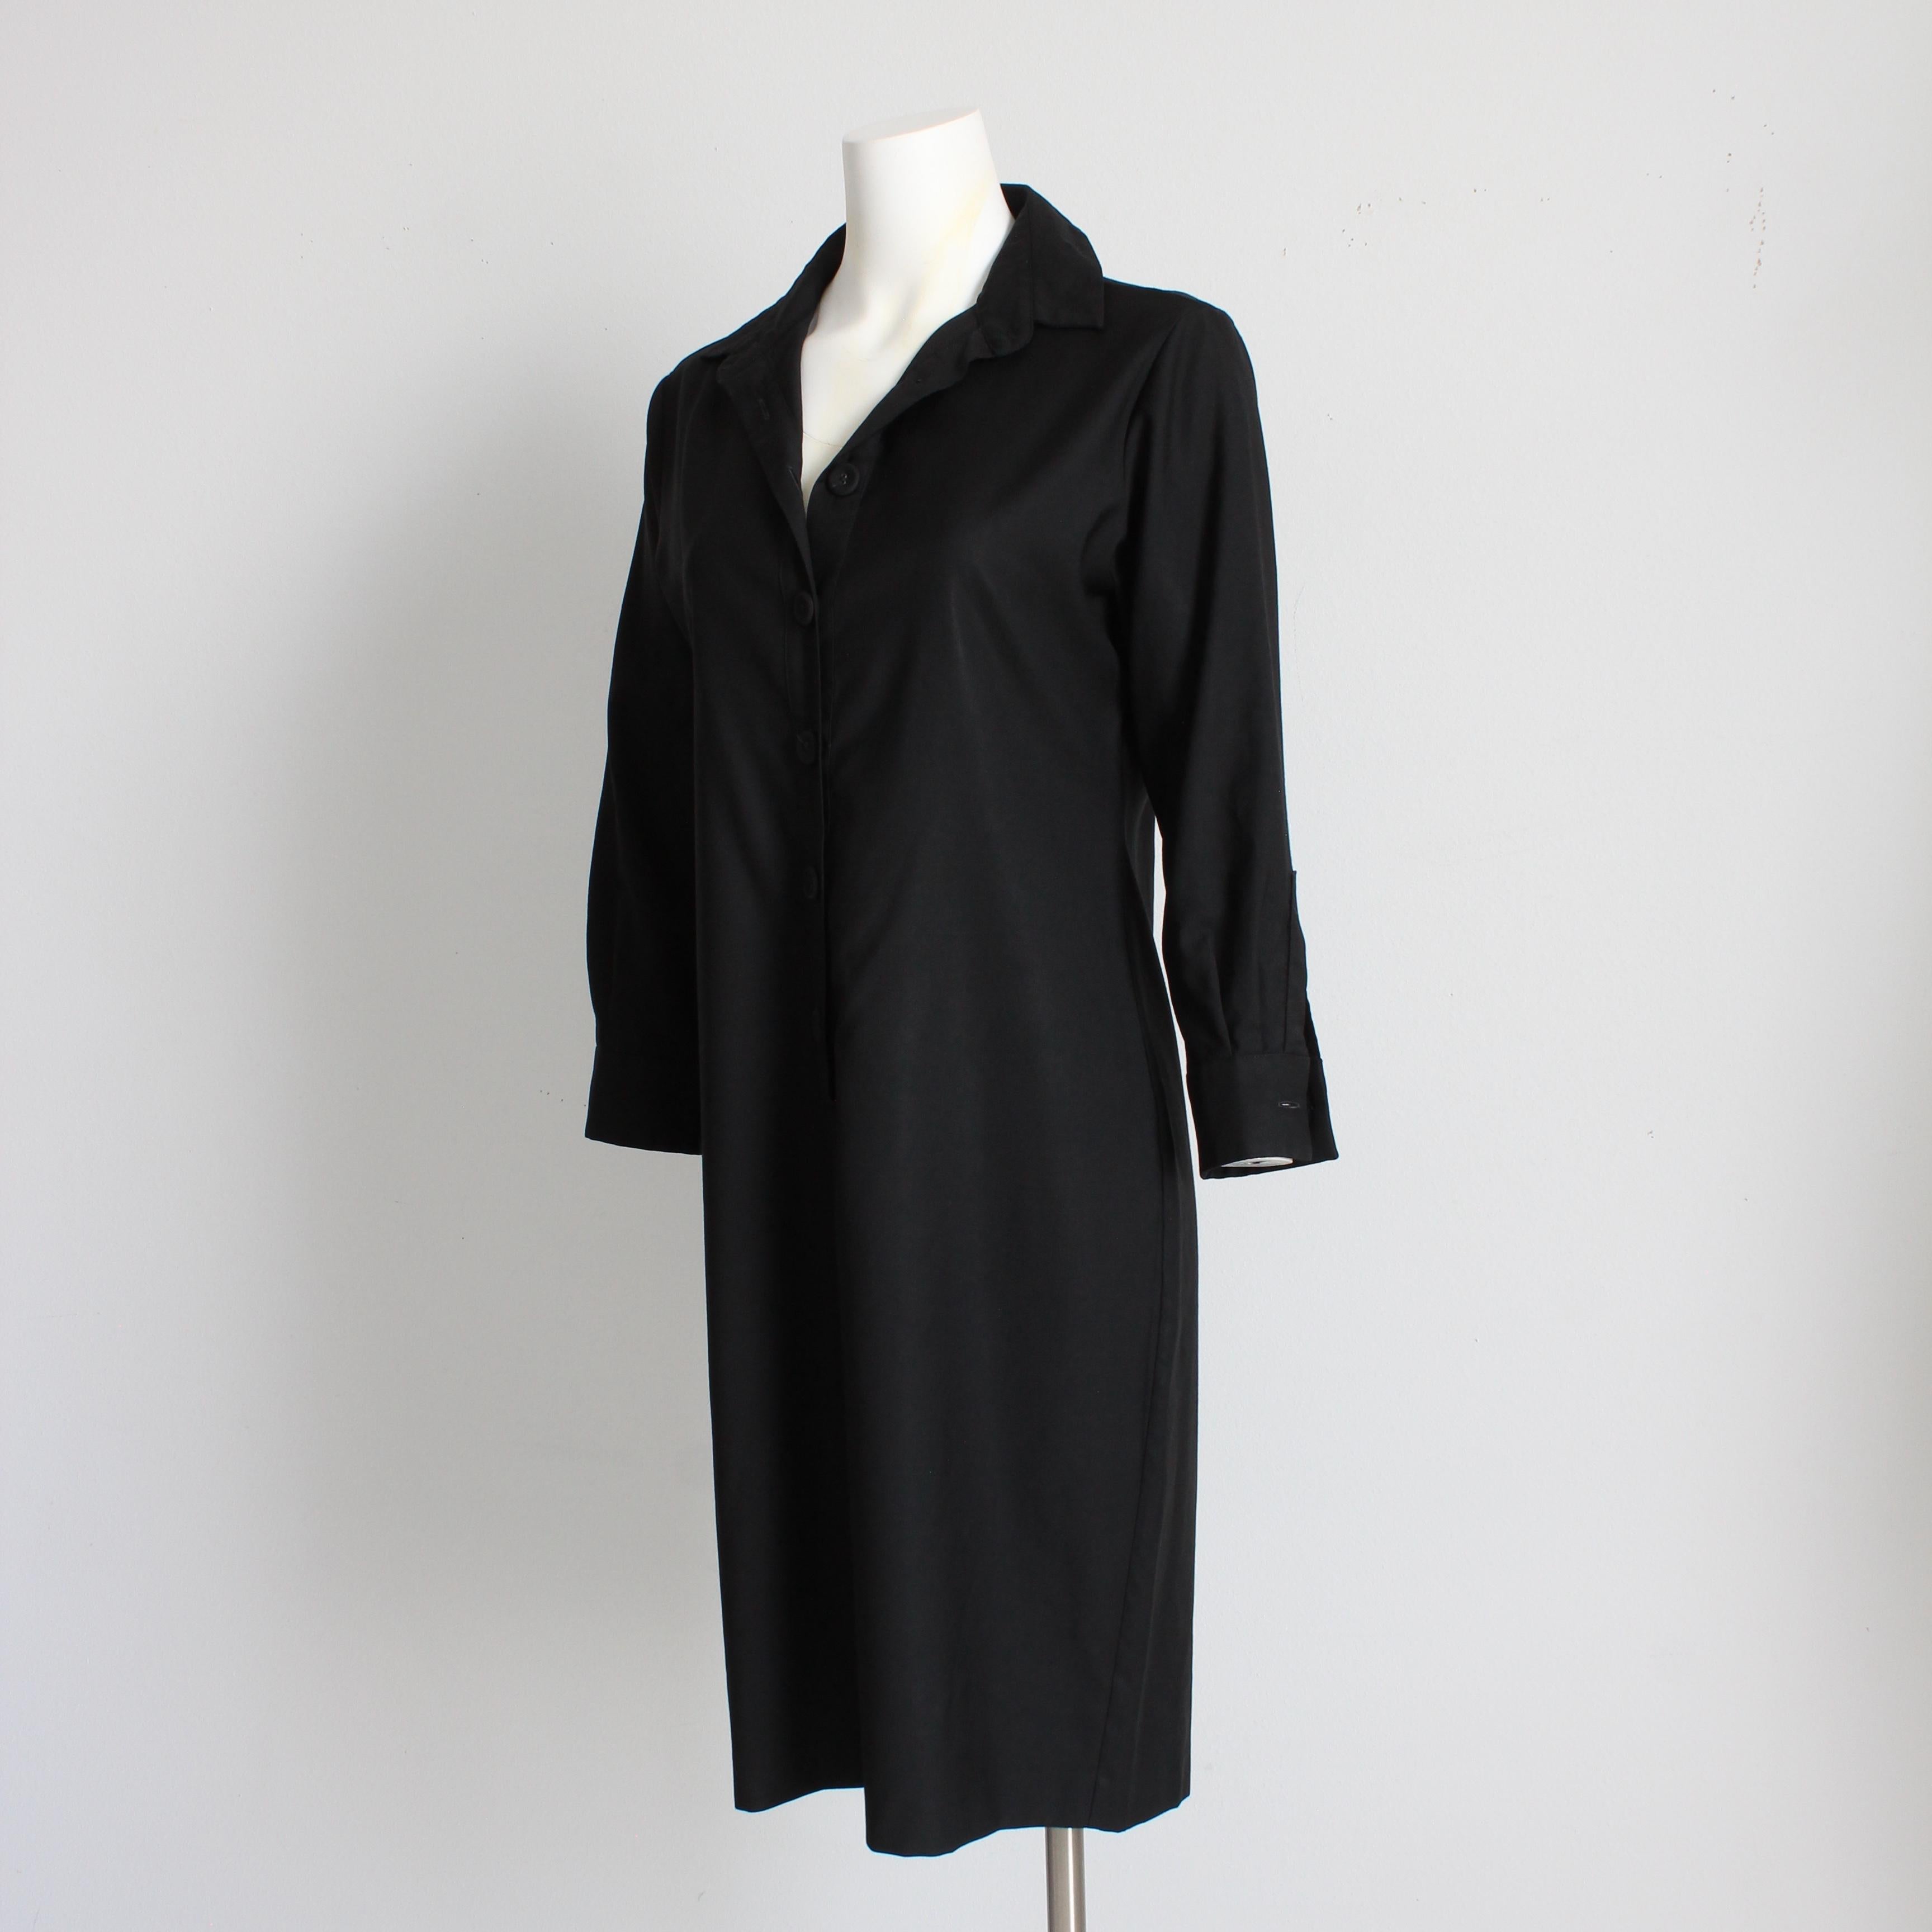 Bottega Veneta Dress Black Wool Twill Shirtwaist LBD Button Front Sz 42 Italy For Sale 2